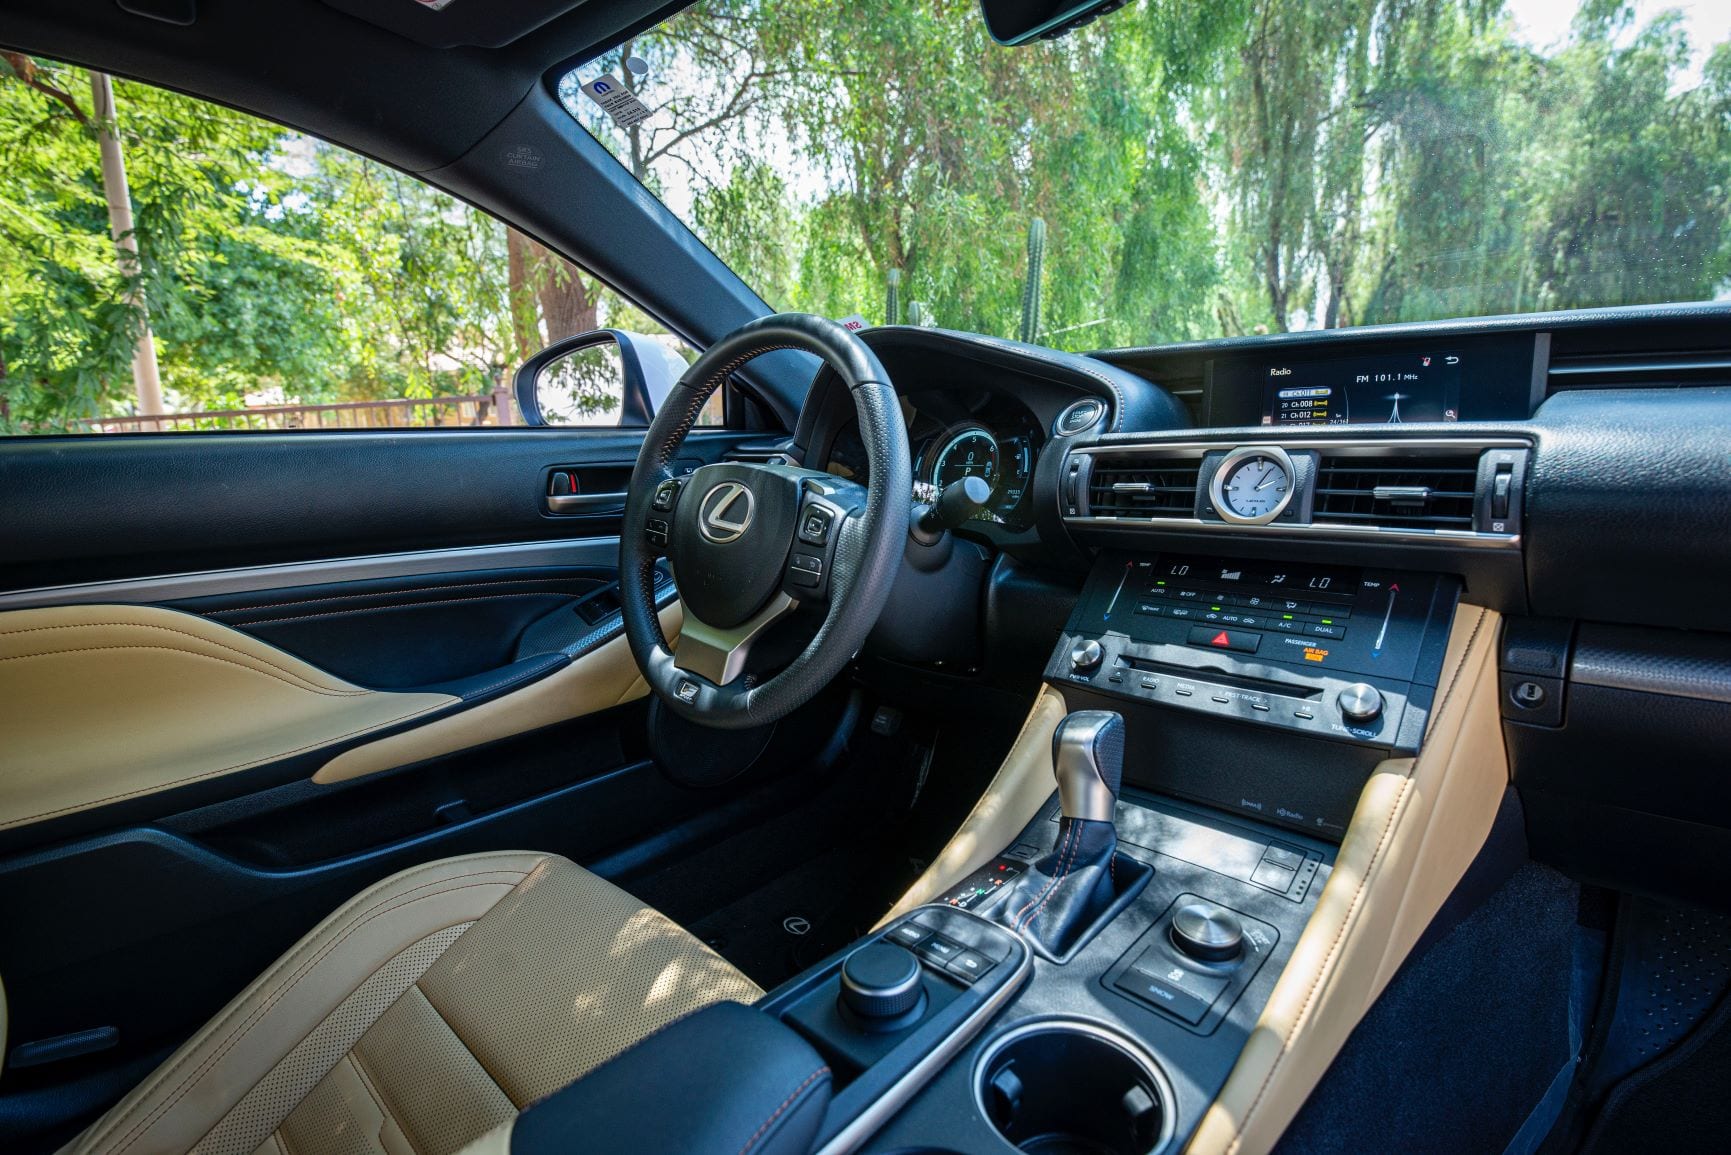 The interior of a modern Lexus